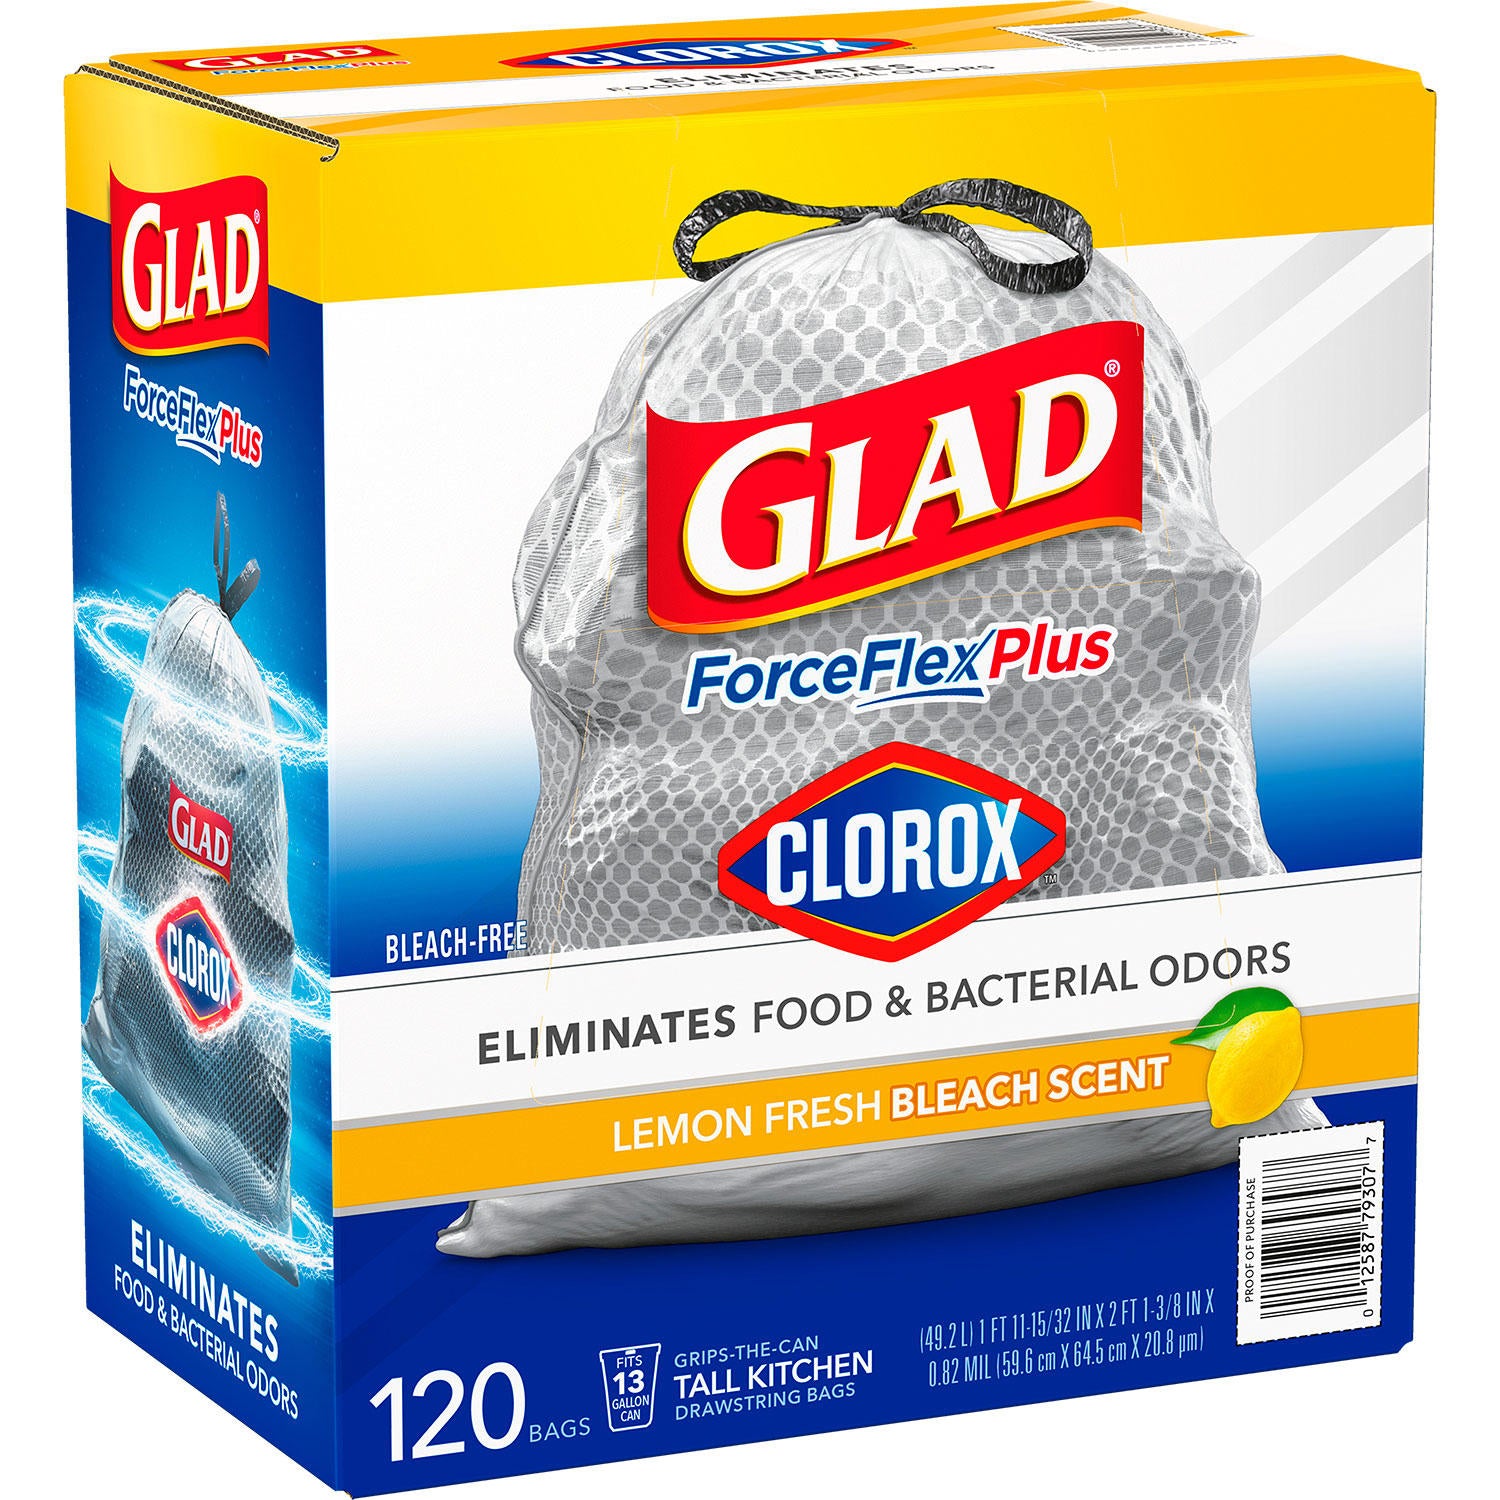 ForceFlex Plus Drawstring Trash Bags, Lemon Fresh Bleach Odor Shield with  Clorox, 13 Gallon, 34-Ct.